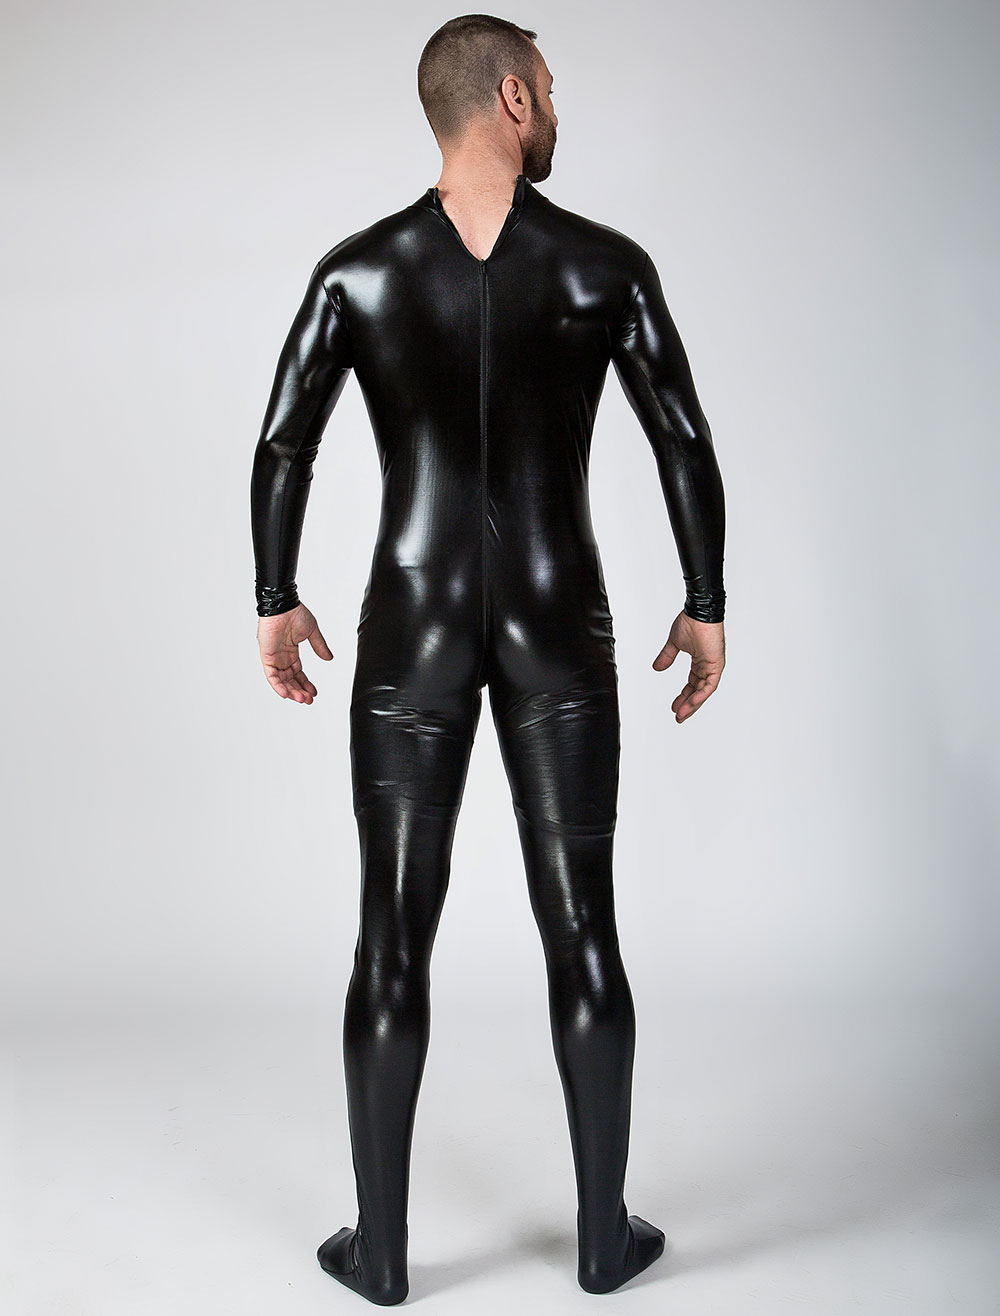 Black Adults Bodysuit Shiny Metallic Catsuit For Men